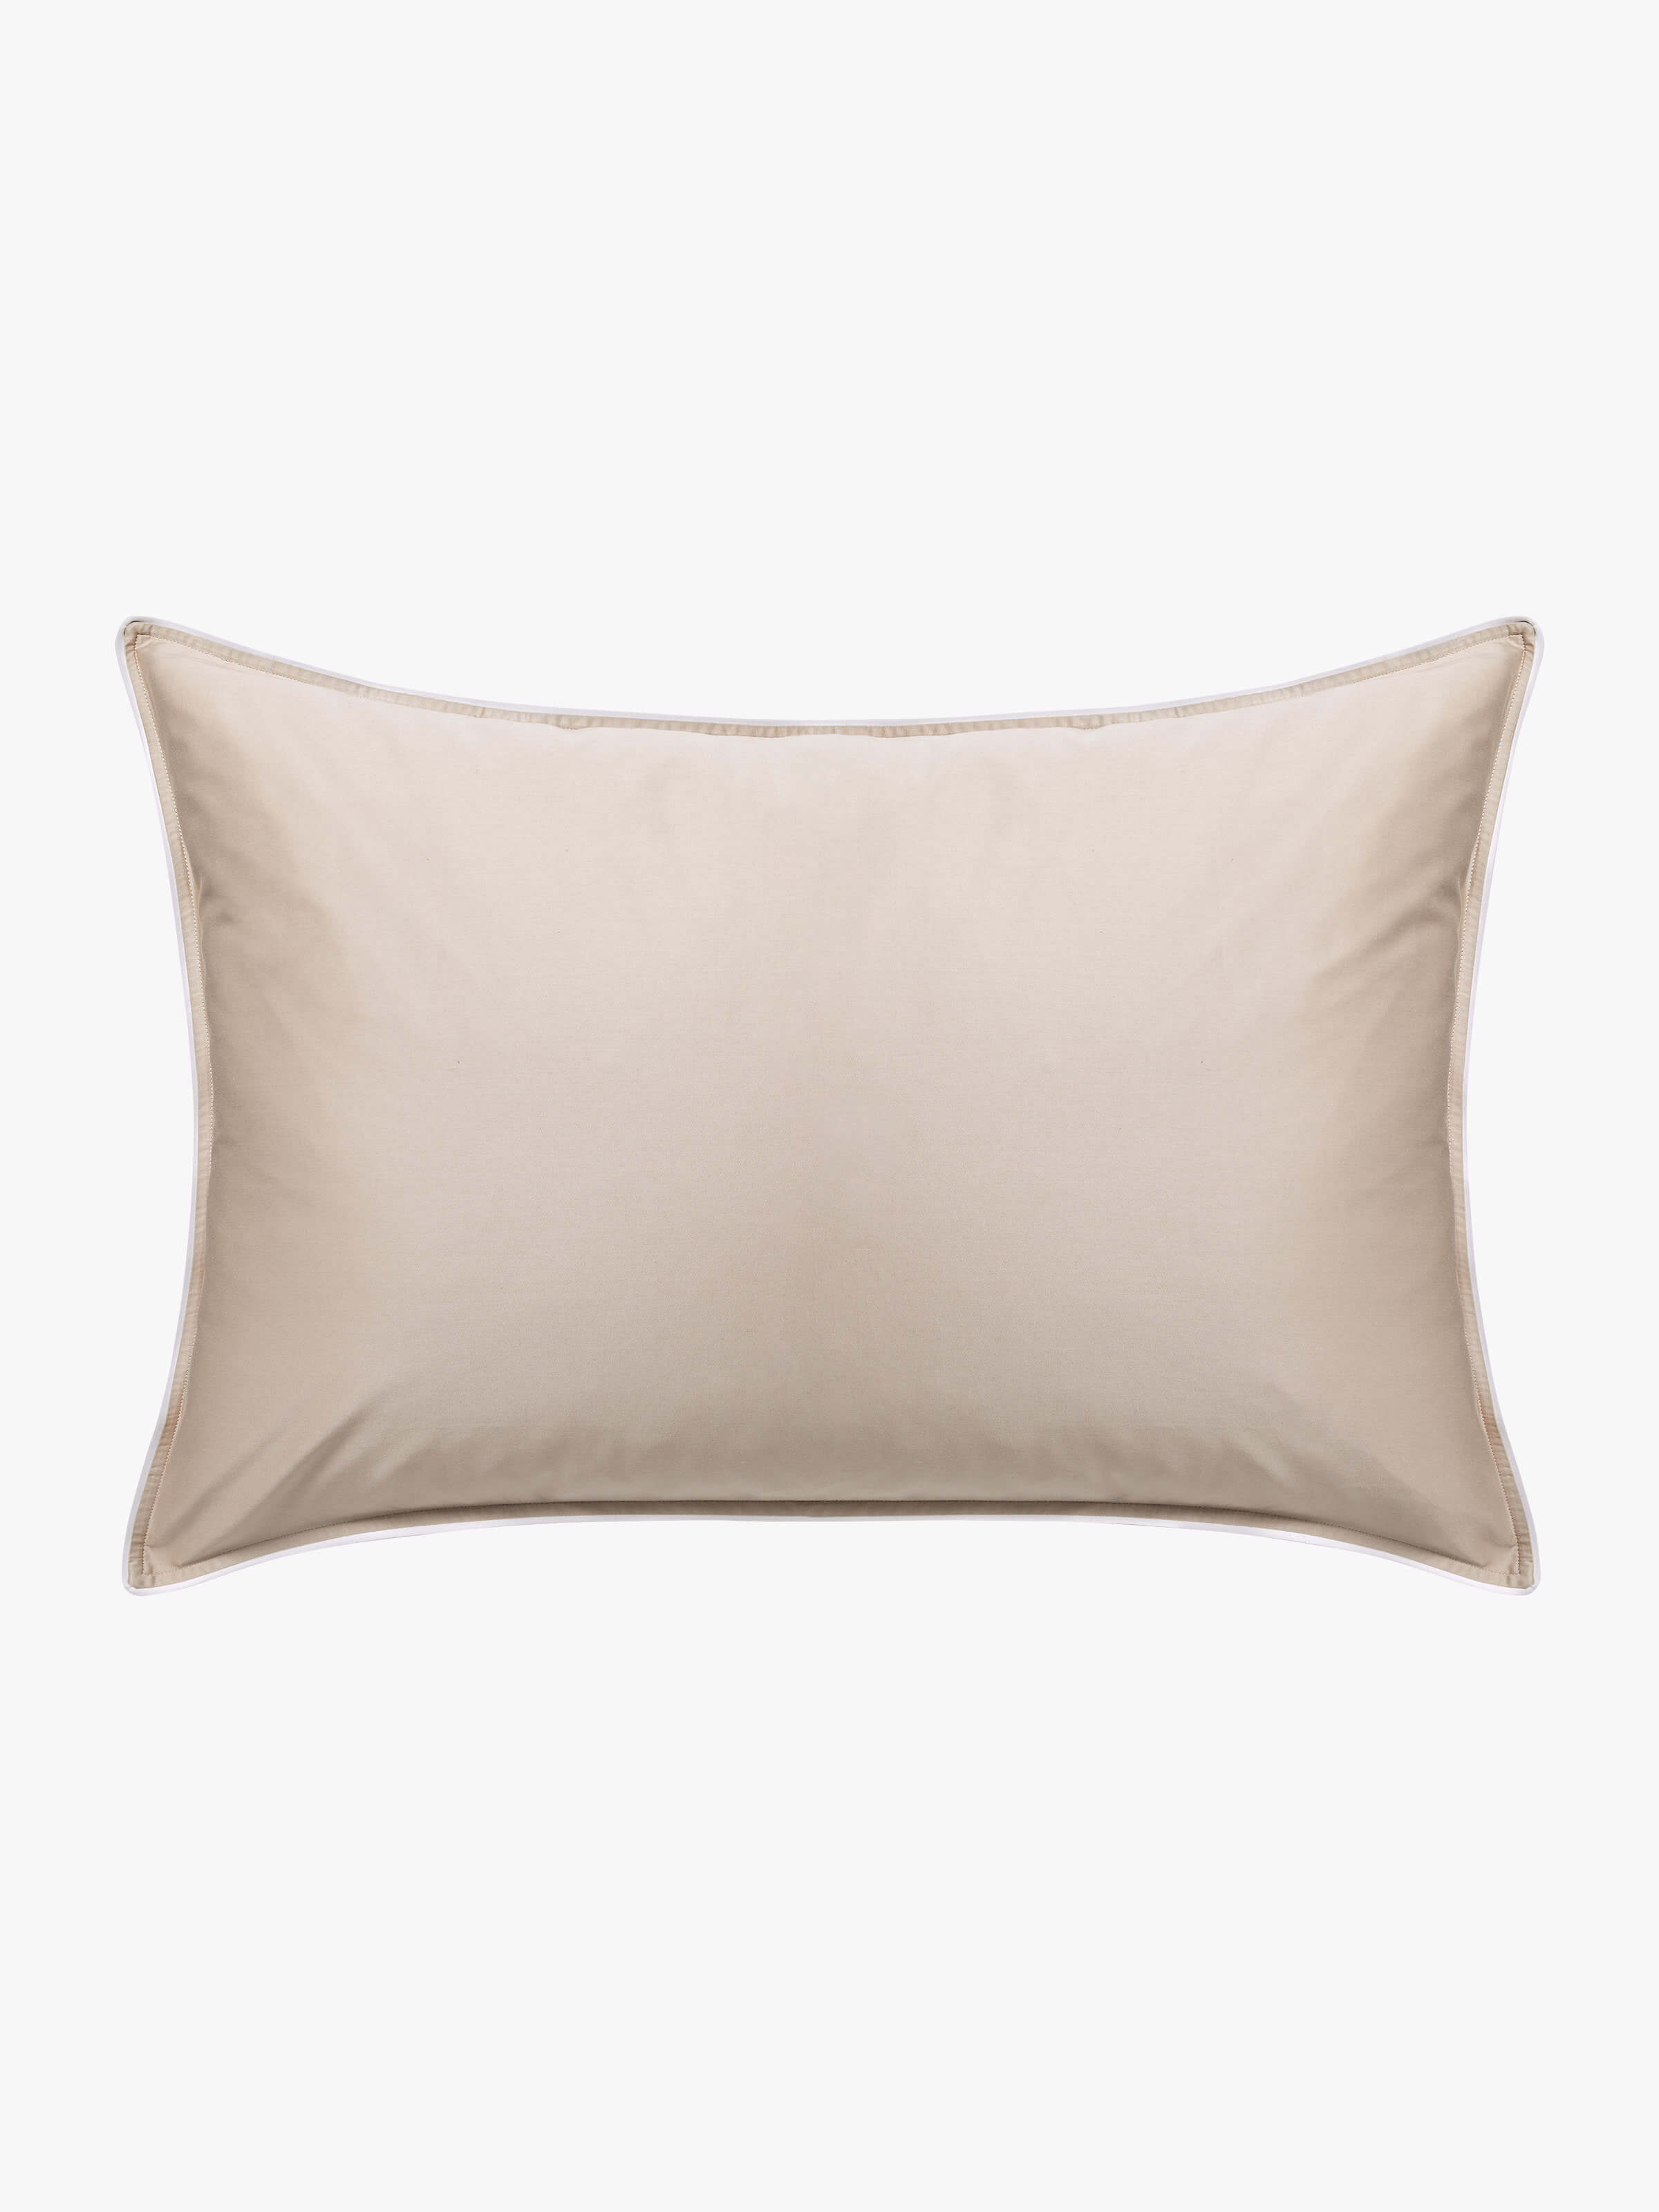 Belmont Dune Organic Cotton Pillowcases